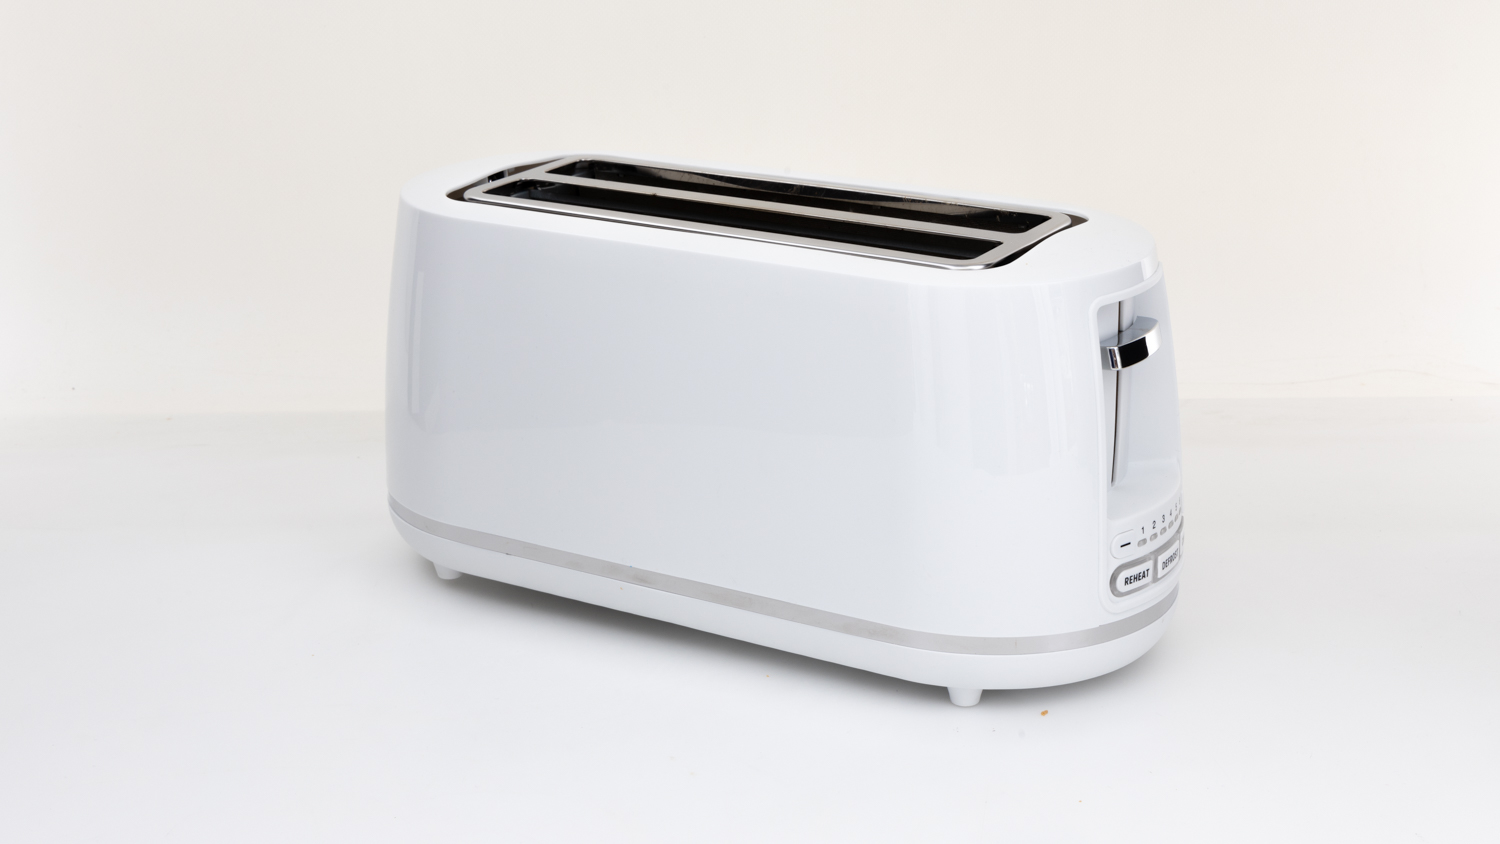 Kmart Anko 4 Slice Long Slot Toaster LD-T9006C carousel image